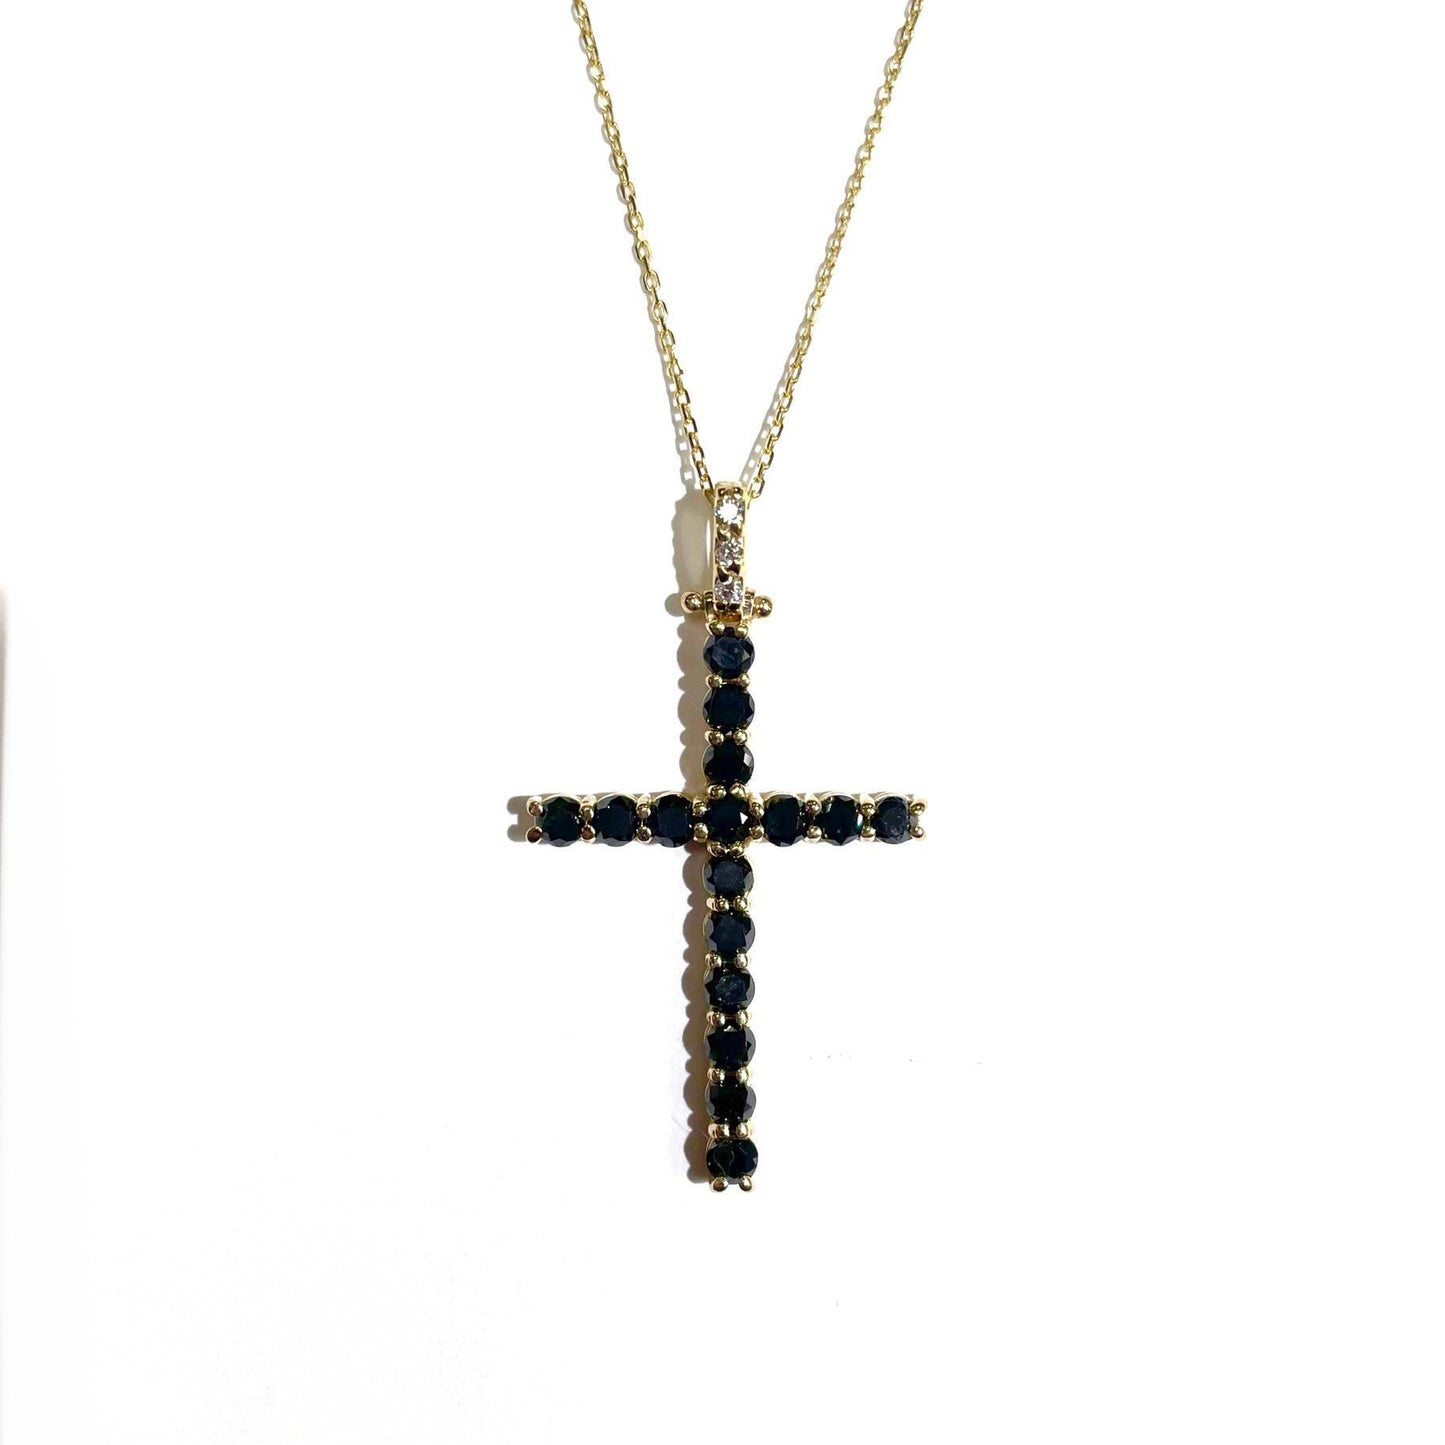 His Black Diamond Cross Pendant